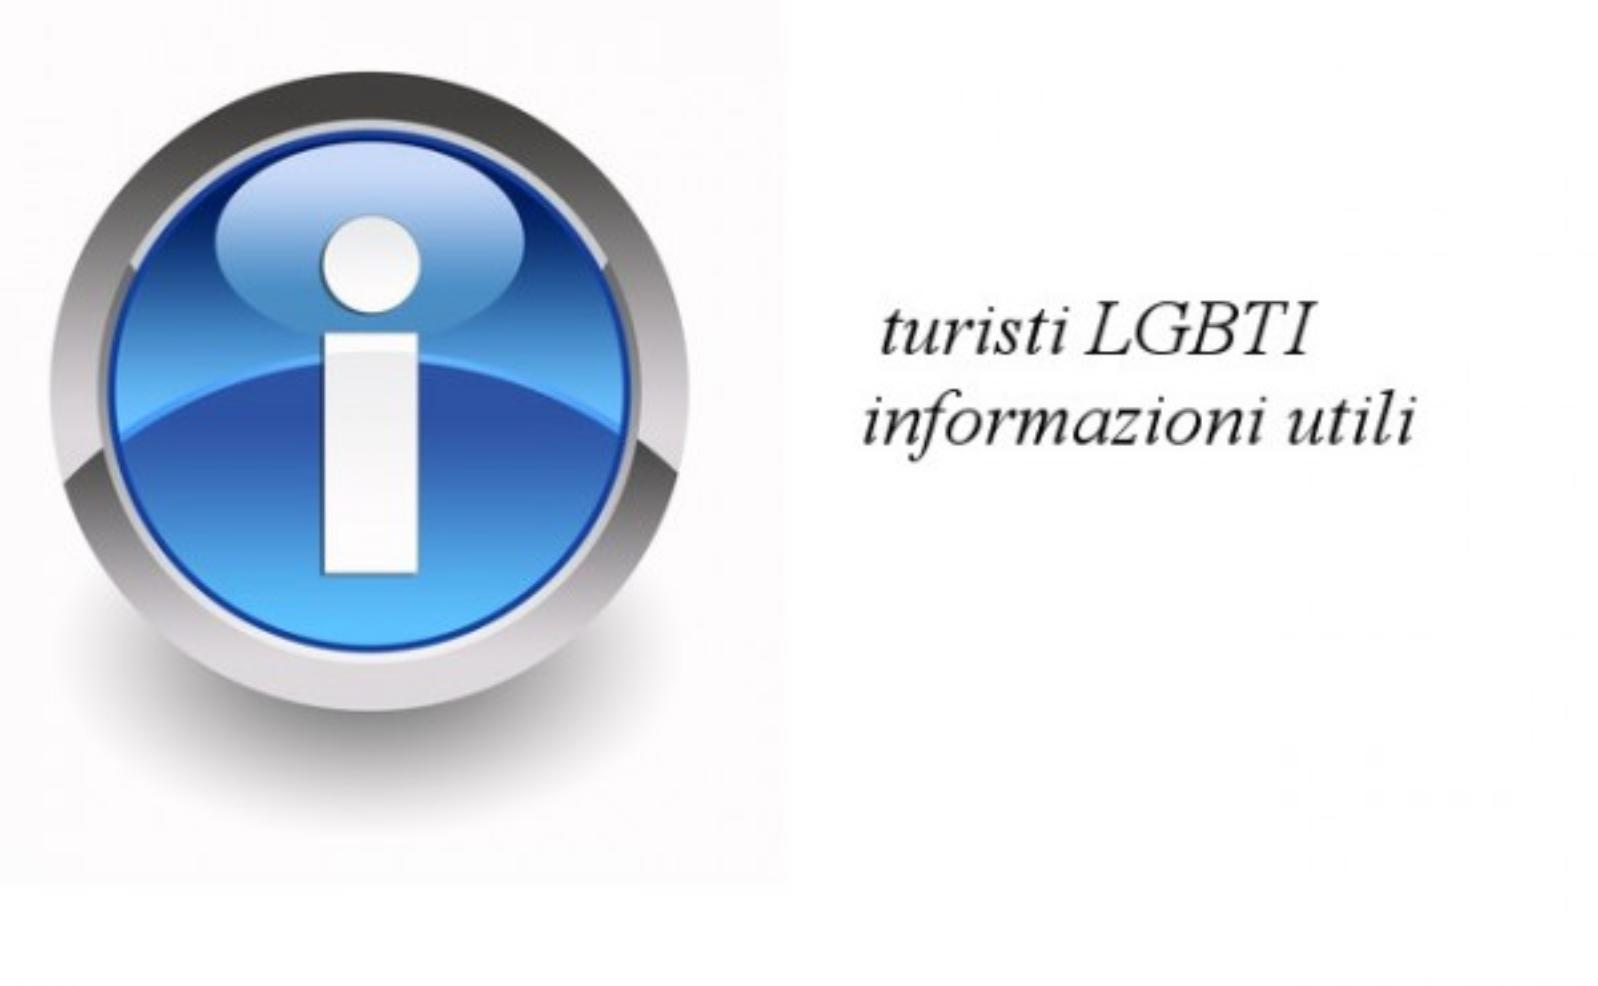 LGBTI Tourists – Useful information